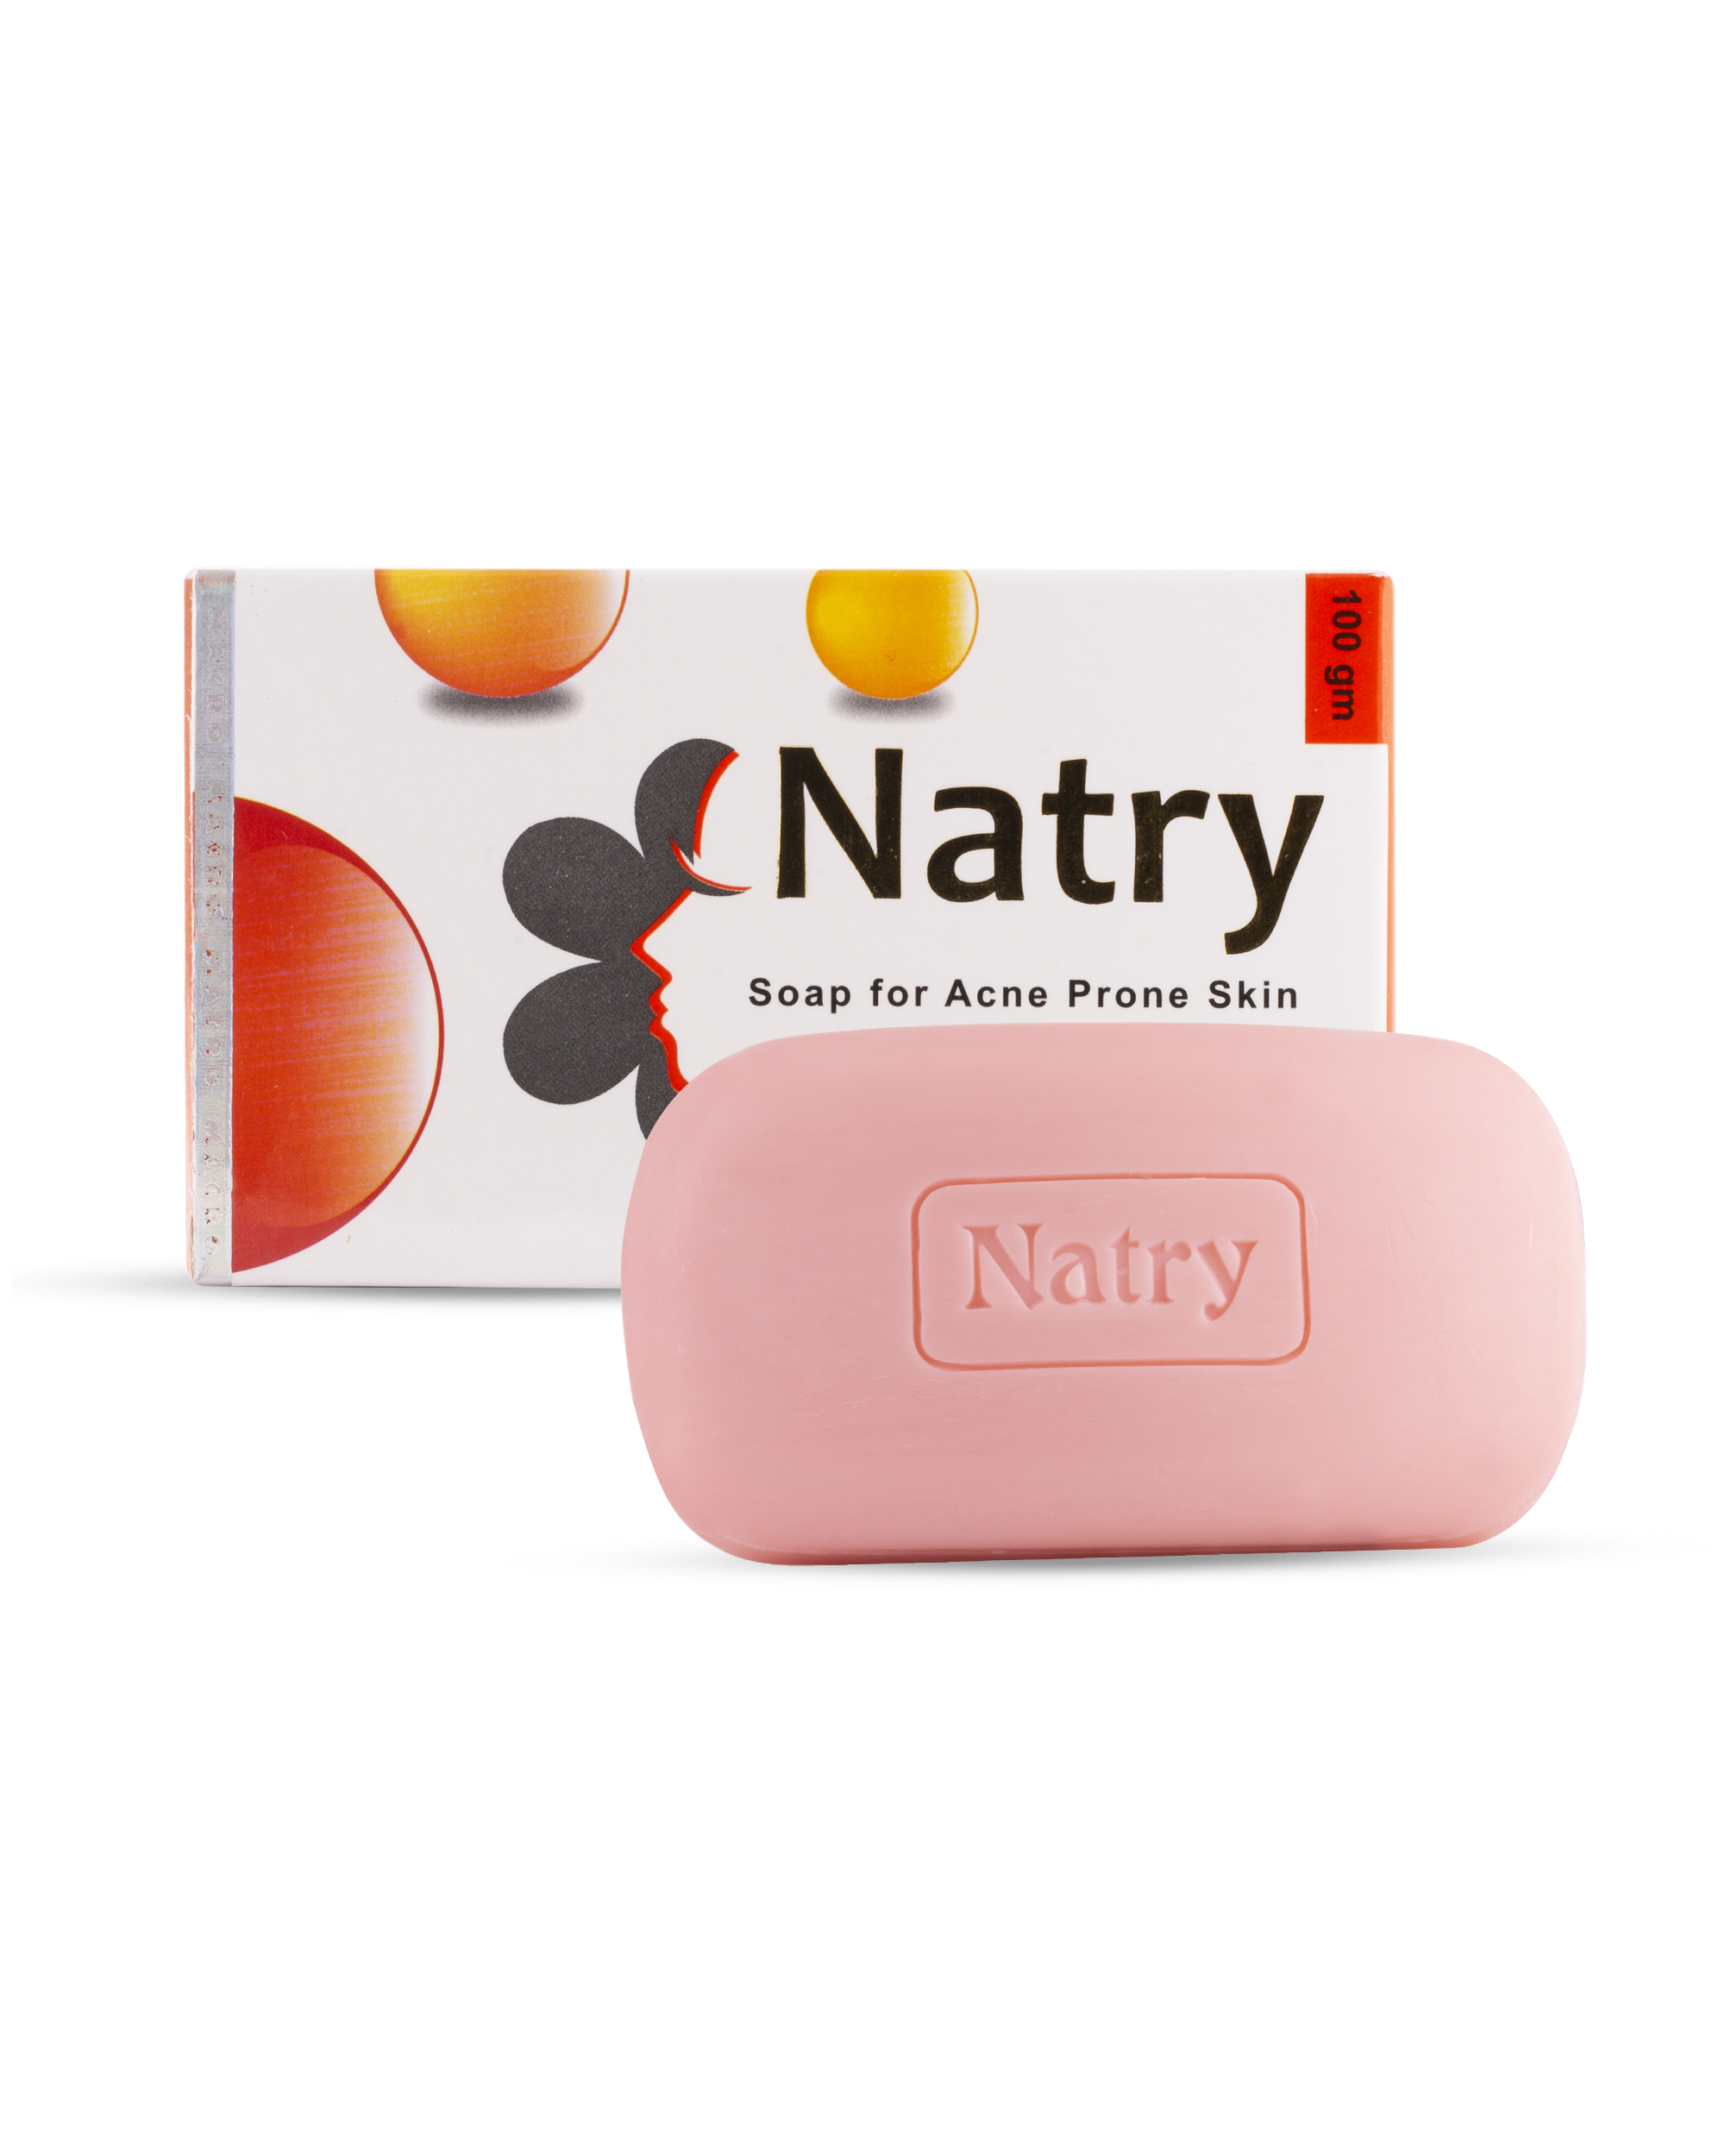 Natry Soap